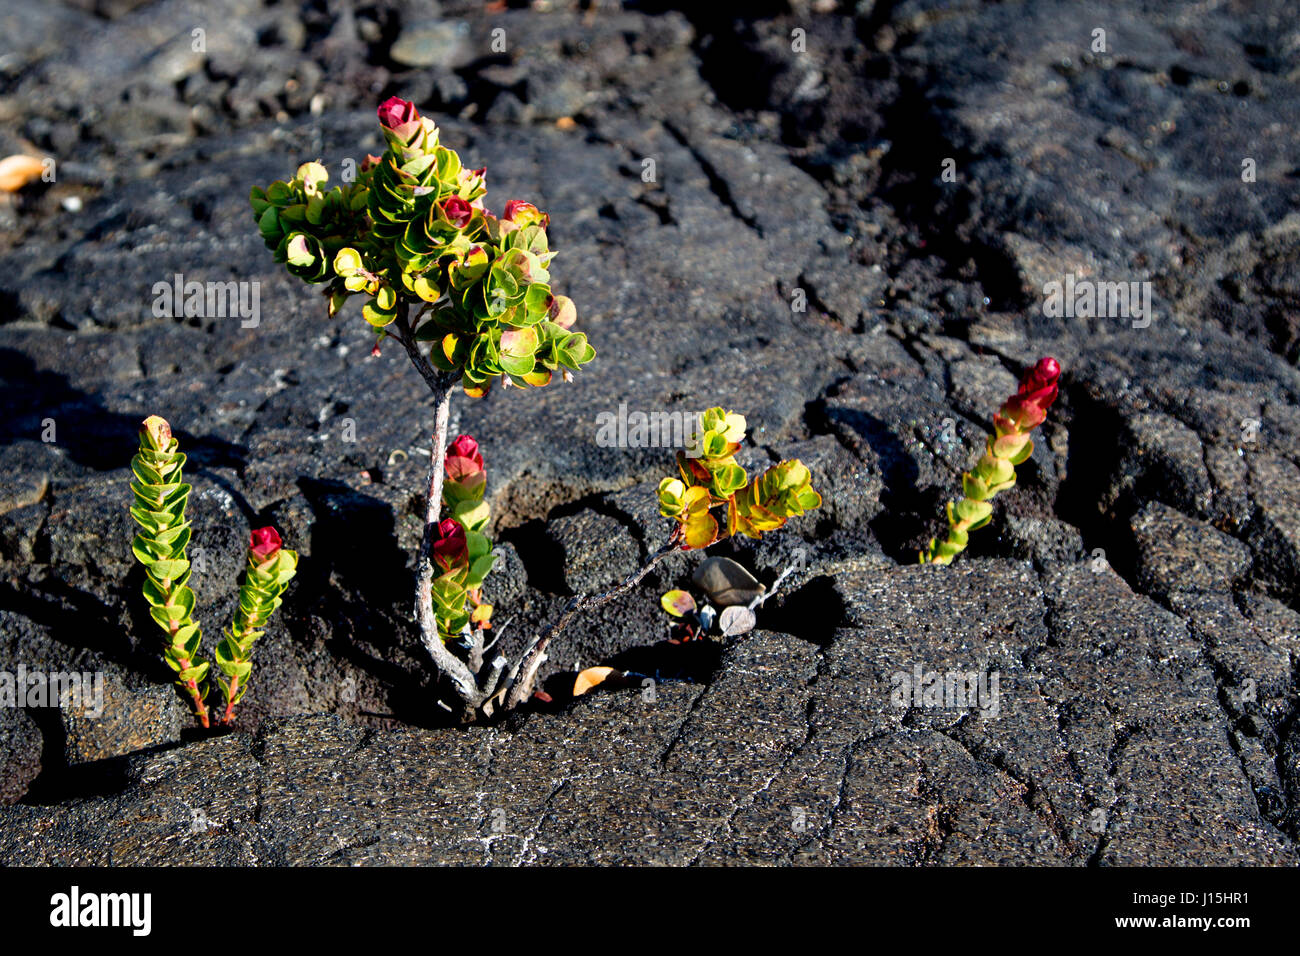 A green plant grows between black lava rocks in the Hawaii Volcanoes National Park on Big Island, Hawaii, USA. Stock Photo